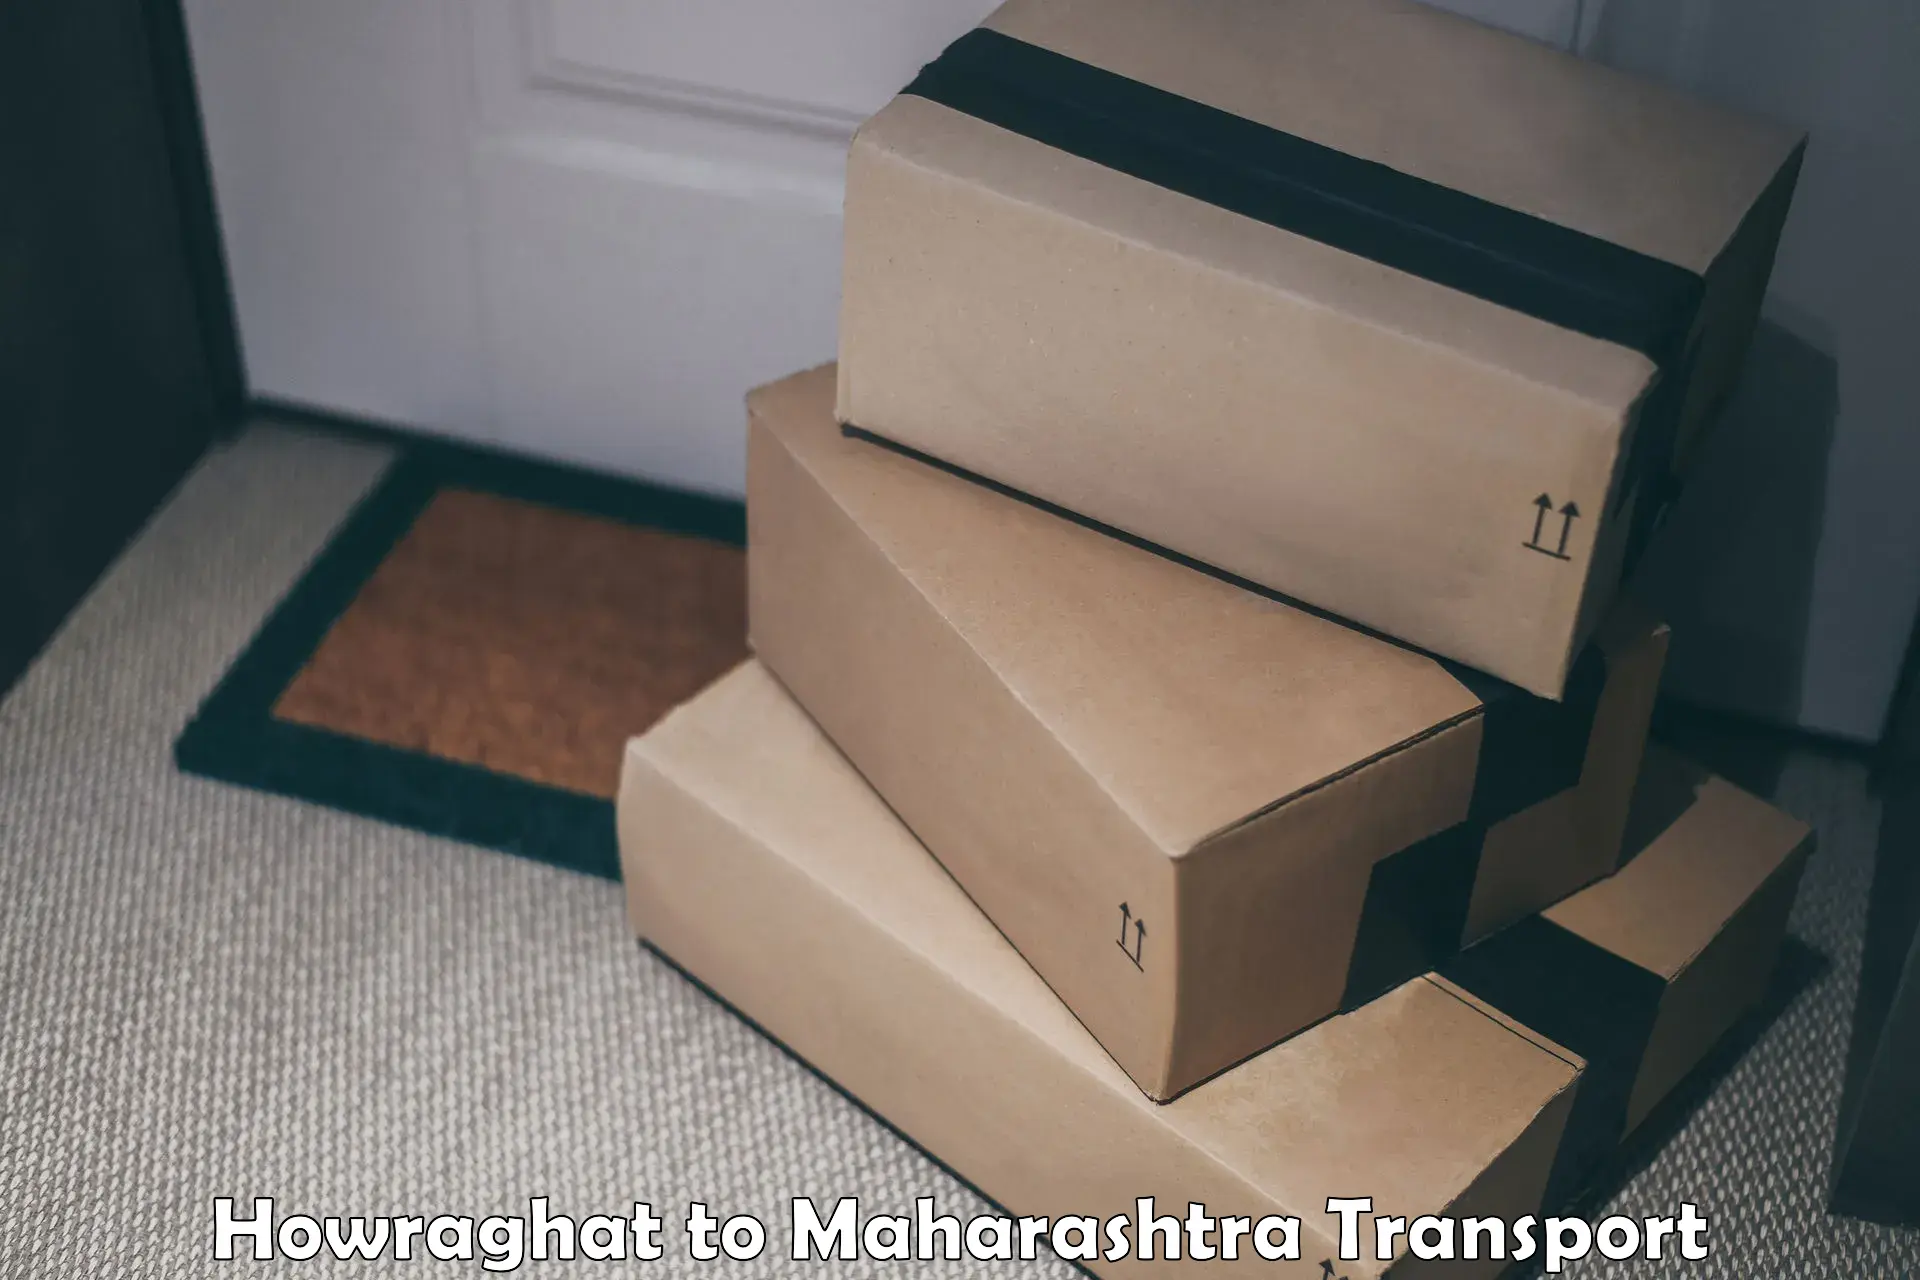 Furniture transport service Howraghat to Pathardi